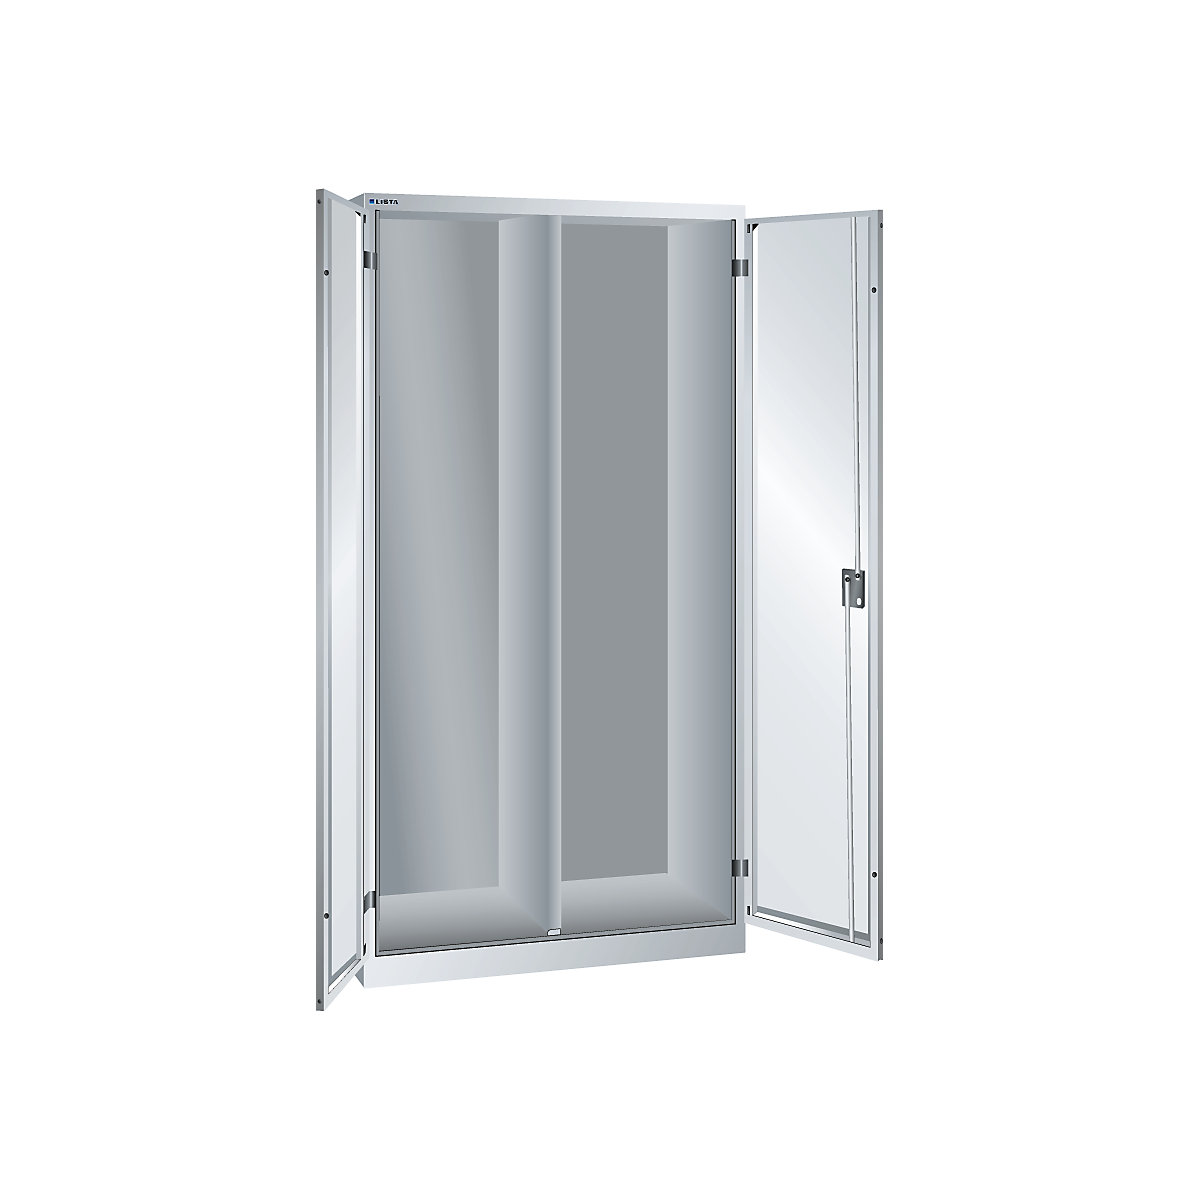 Skříň s otočnými dveřmi, v x š x h 1950 x 1000 x 580 mm – LISTA (Obrázek výrobku 7)-6